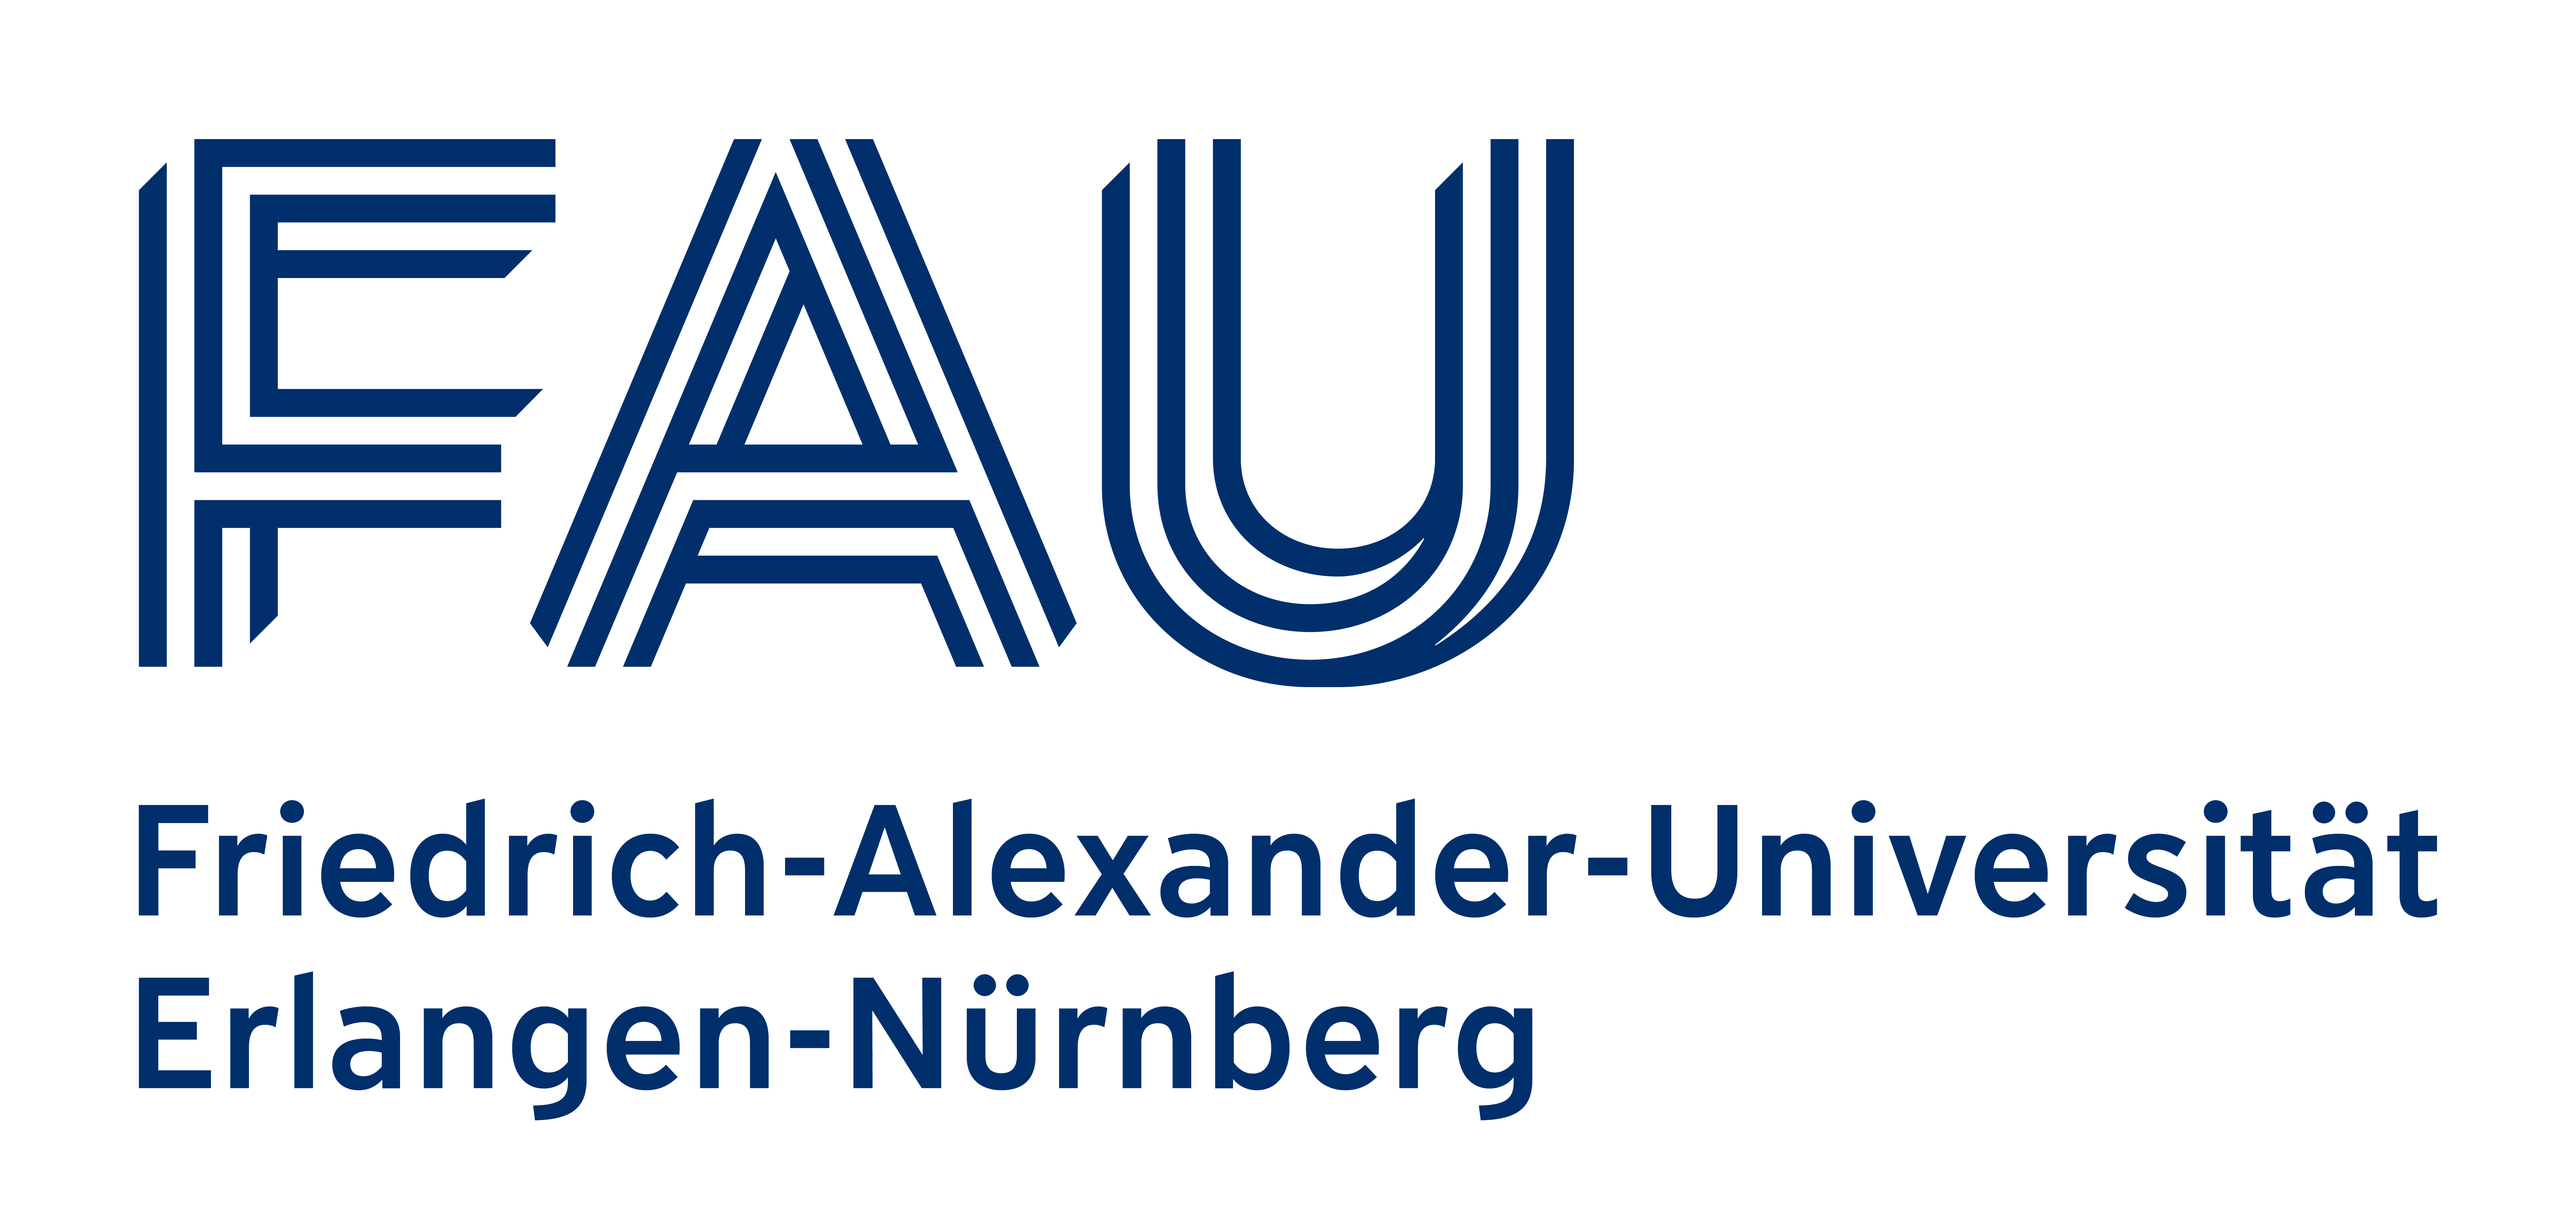 Friedrich-Alexander-Universität Erlangen-Nürnberg logo